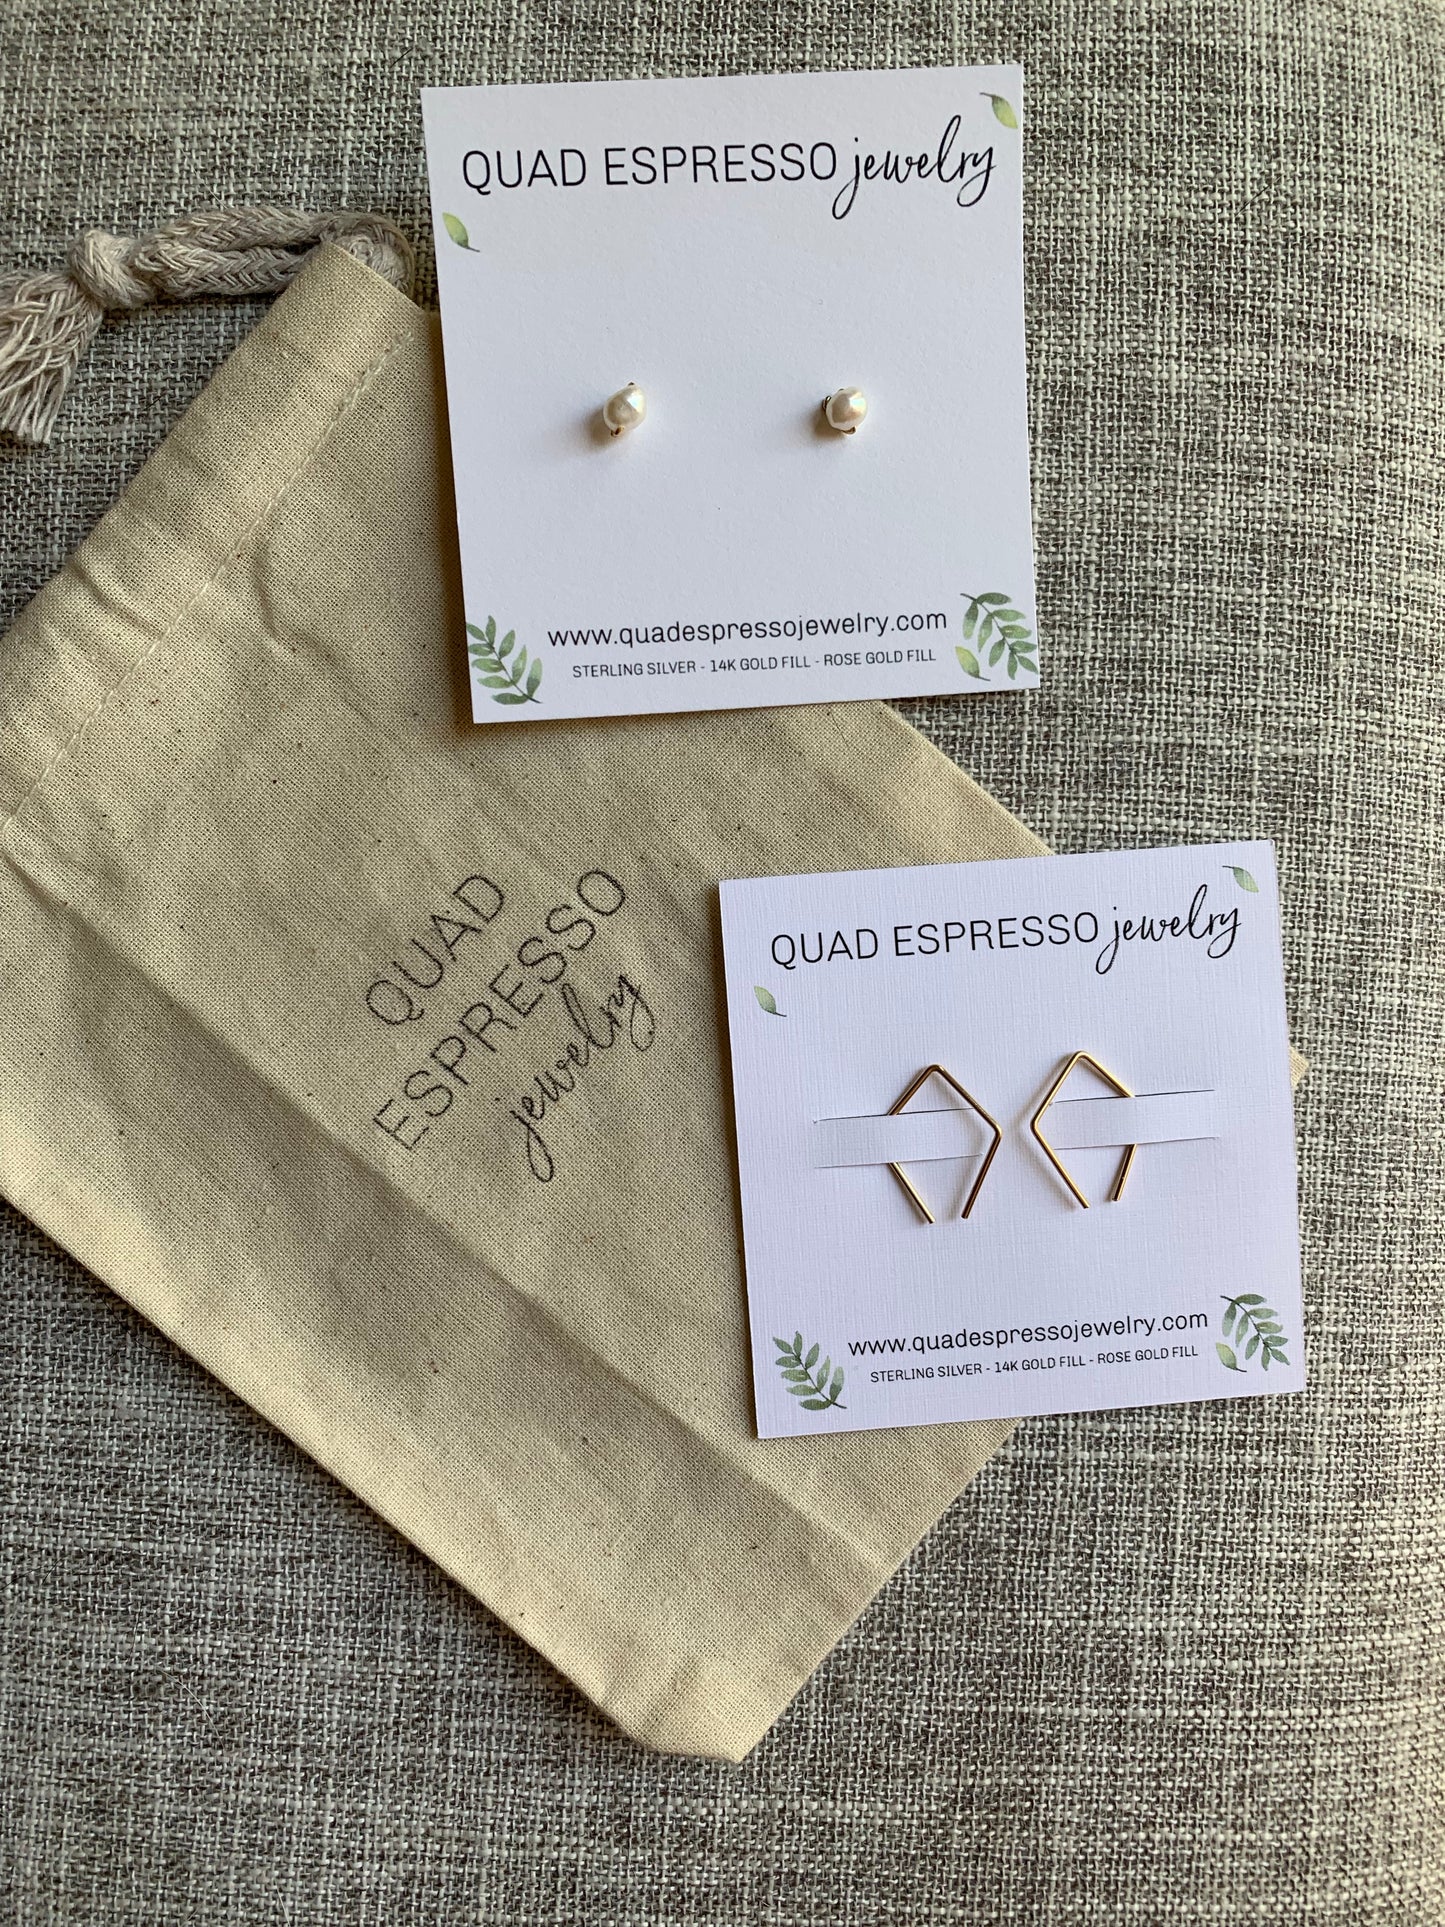 Mini Diamond Sliders - Quad Espresso Jewelry